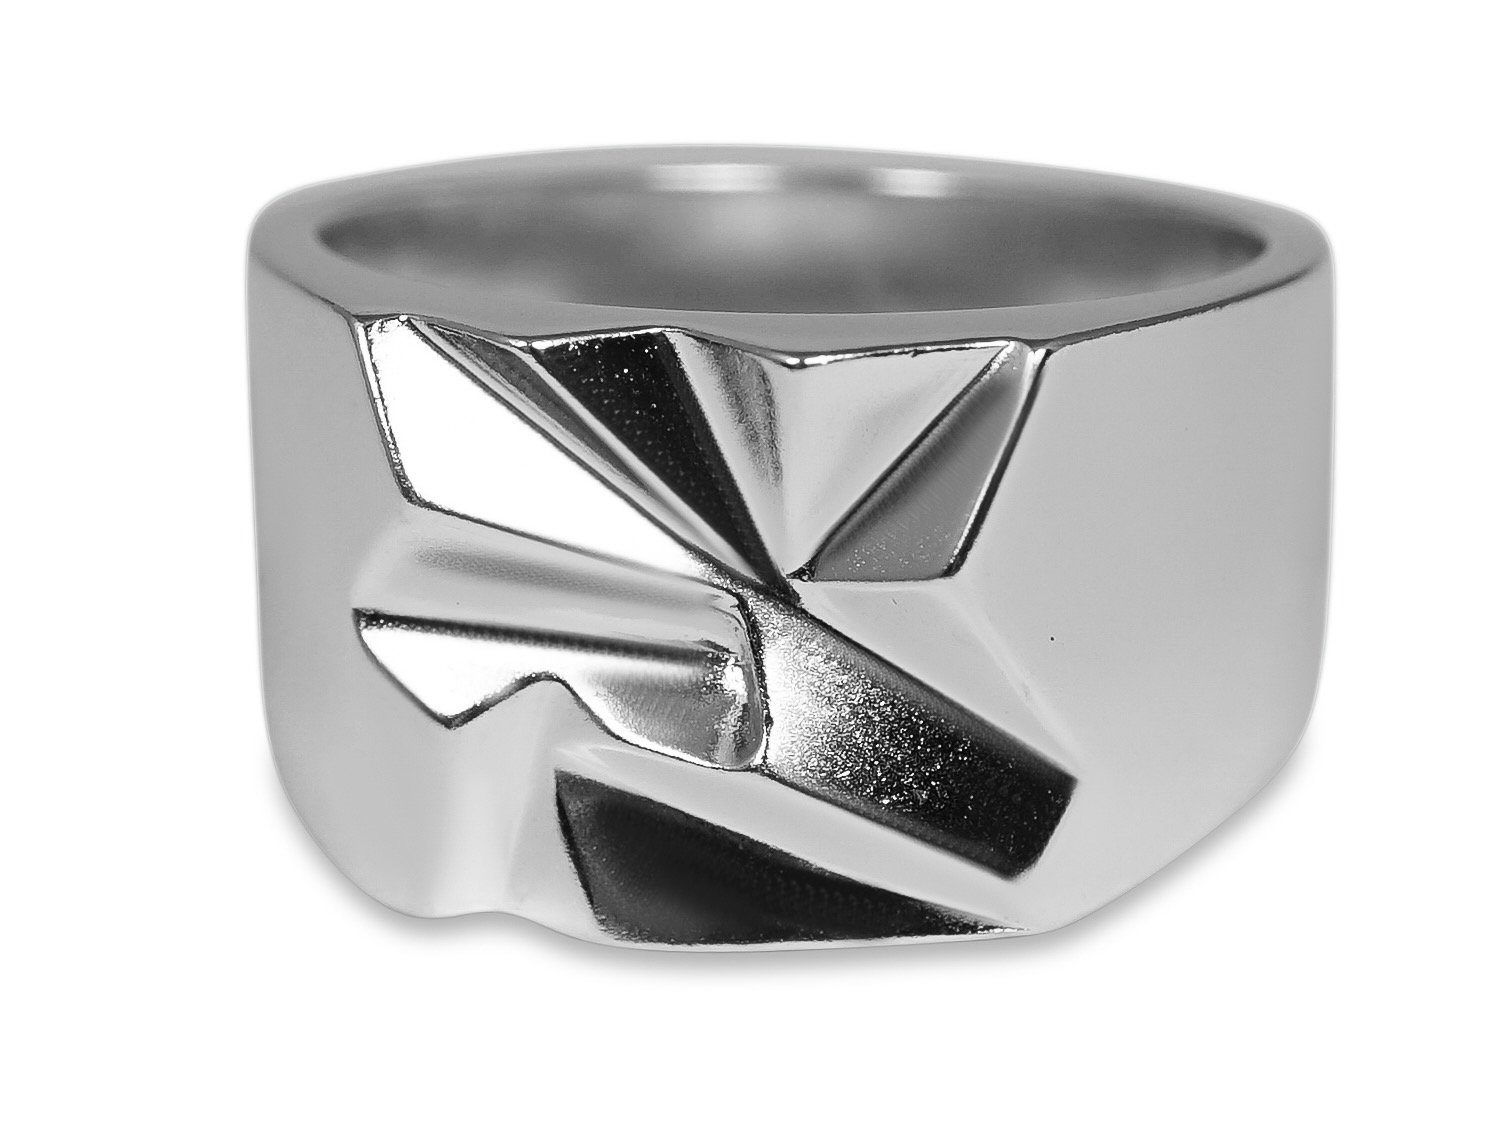 Herren Schmuck Sprezzi Fashion Siegelring Massiver Herren Silber Ring Moderner Fingerring Siegelring aus massivem 925er Sterling